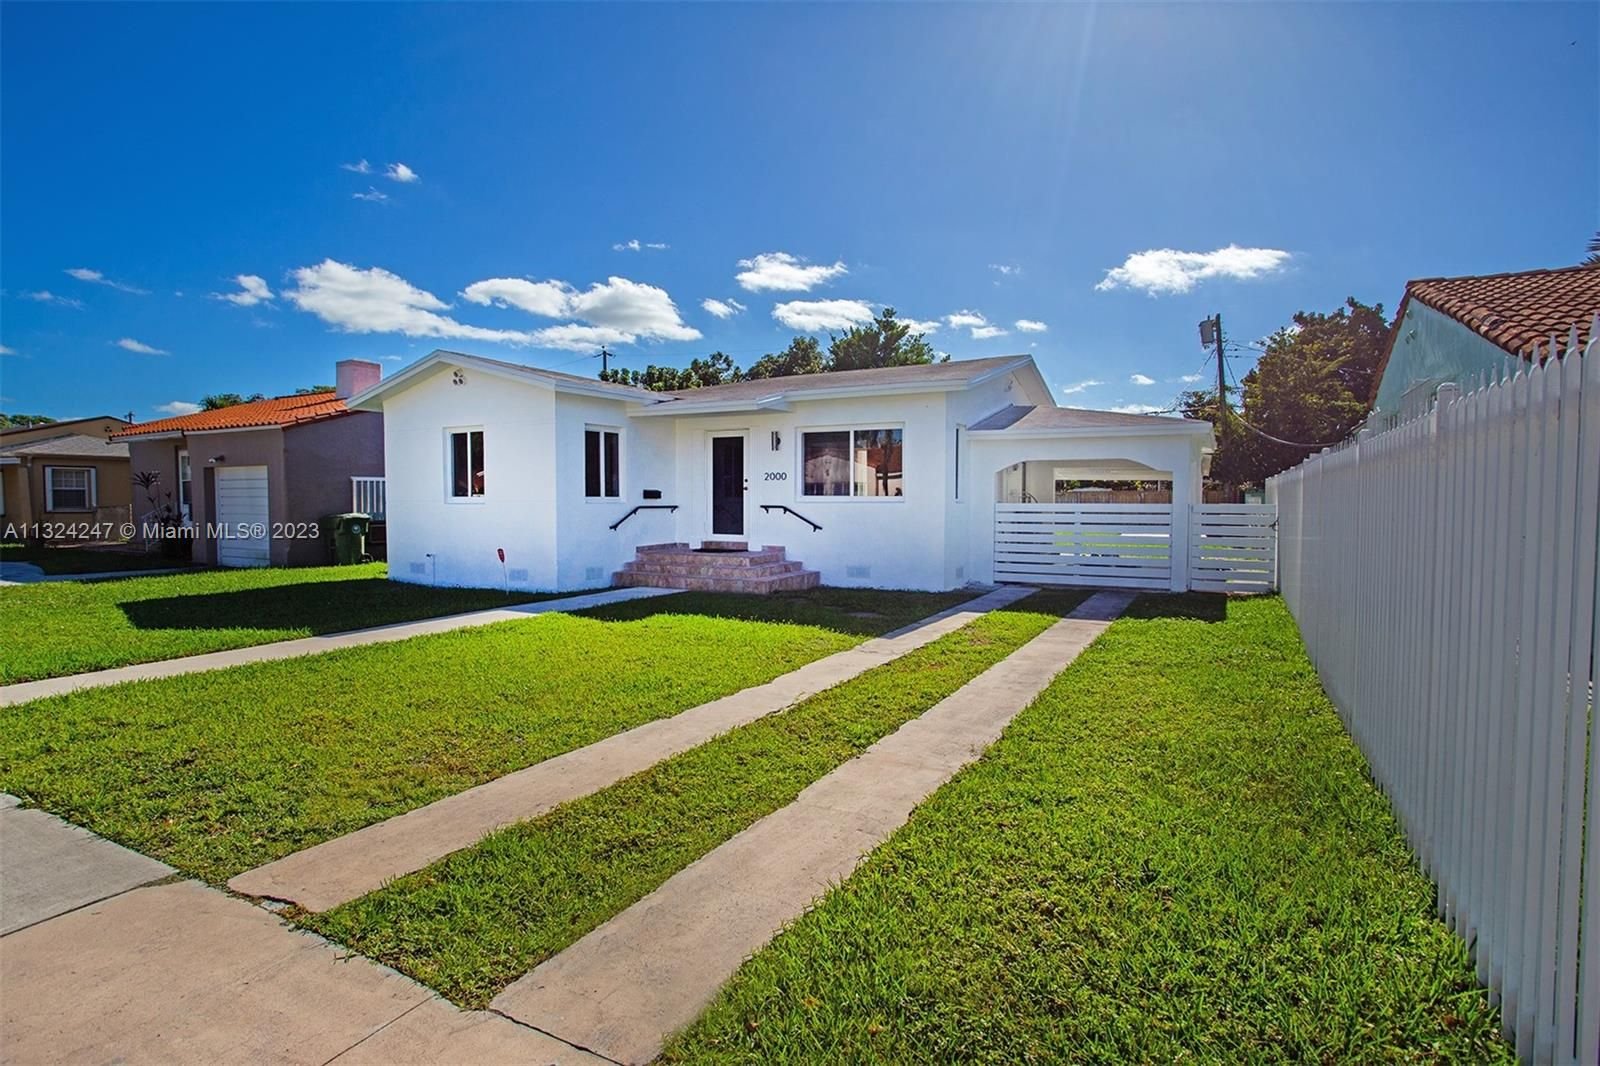 Real estate property located at 2000 17th St, Miami-Dade County, Miami, FL